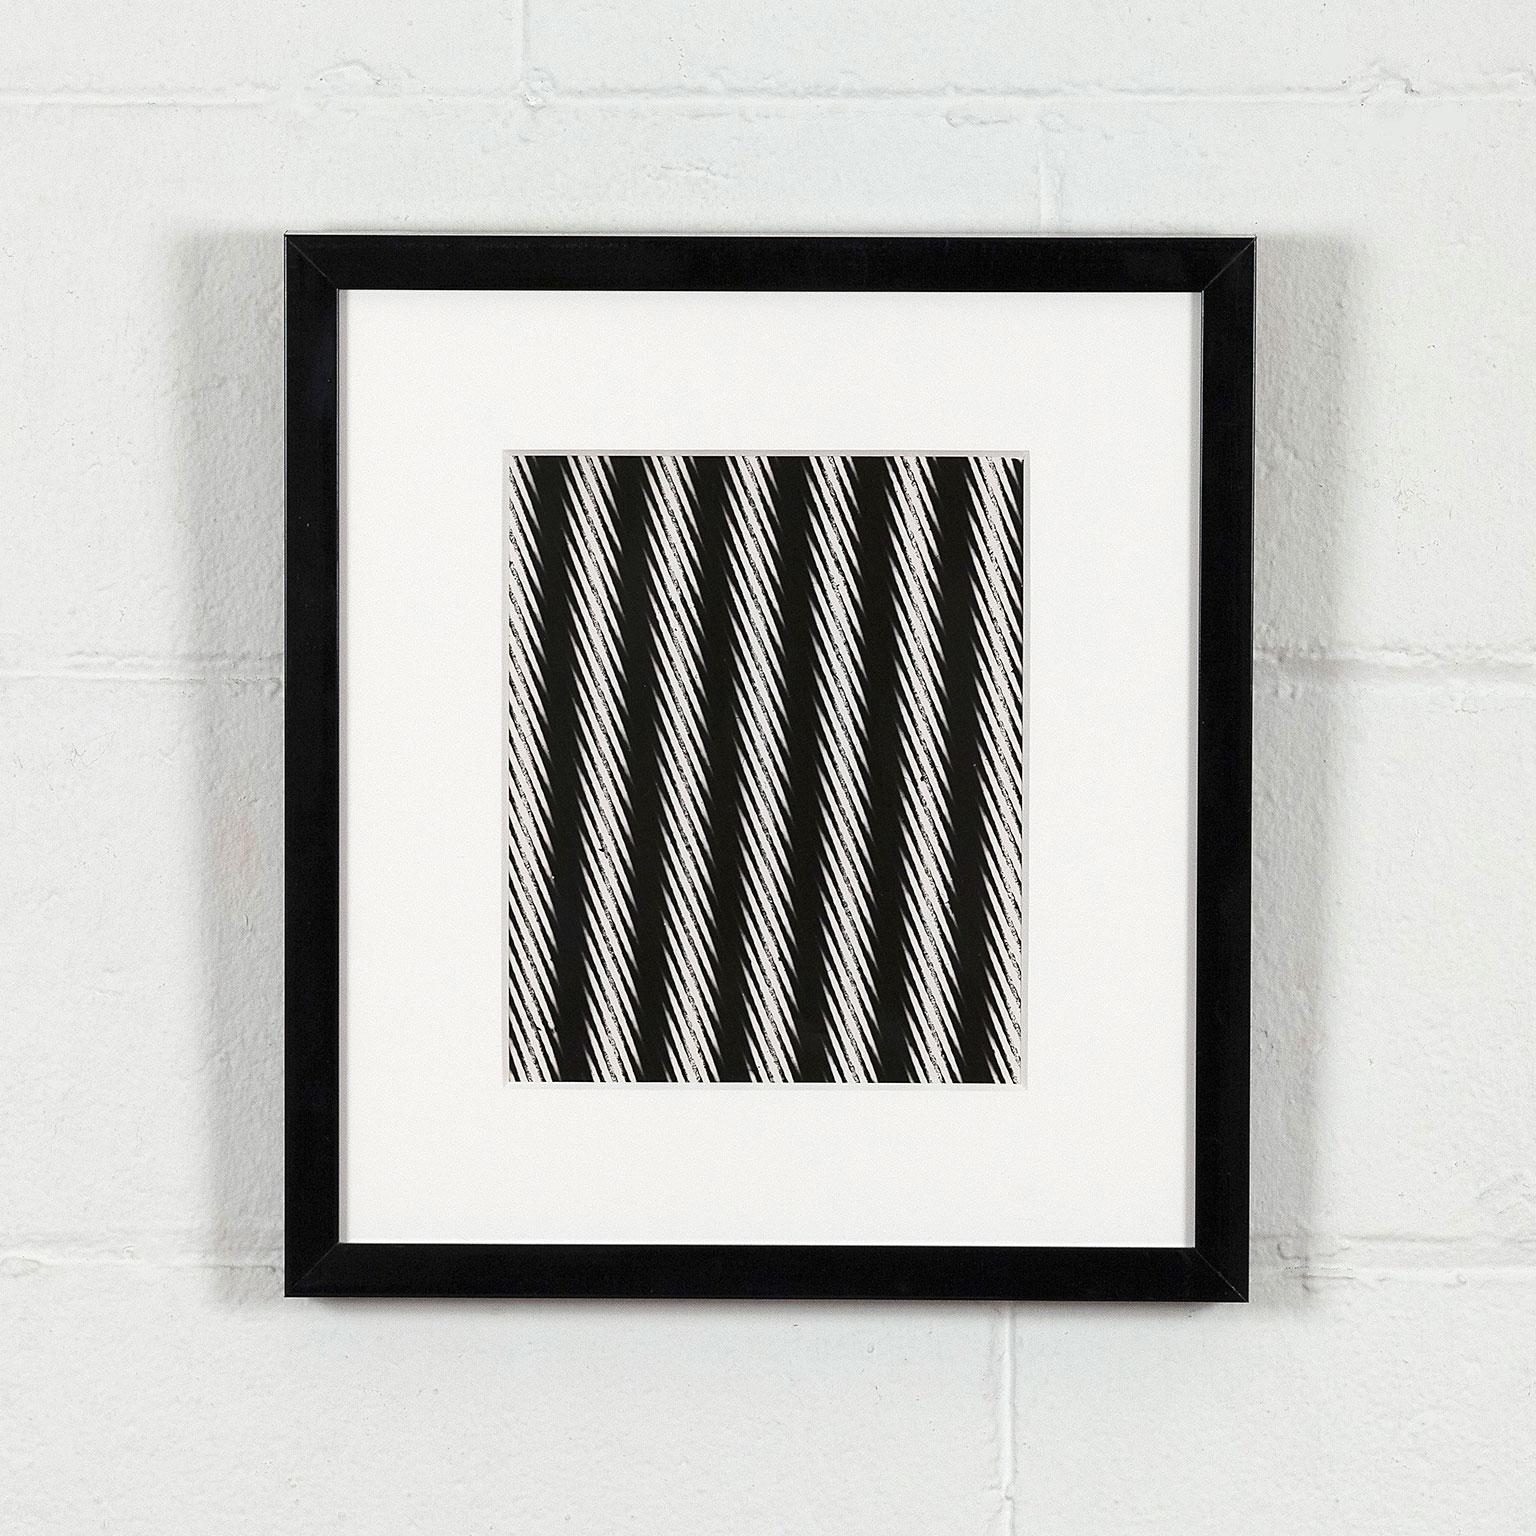 Weegee "Distortion: Stripes" 